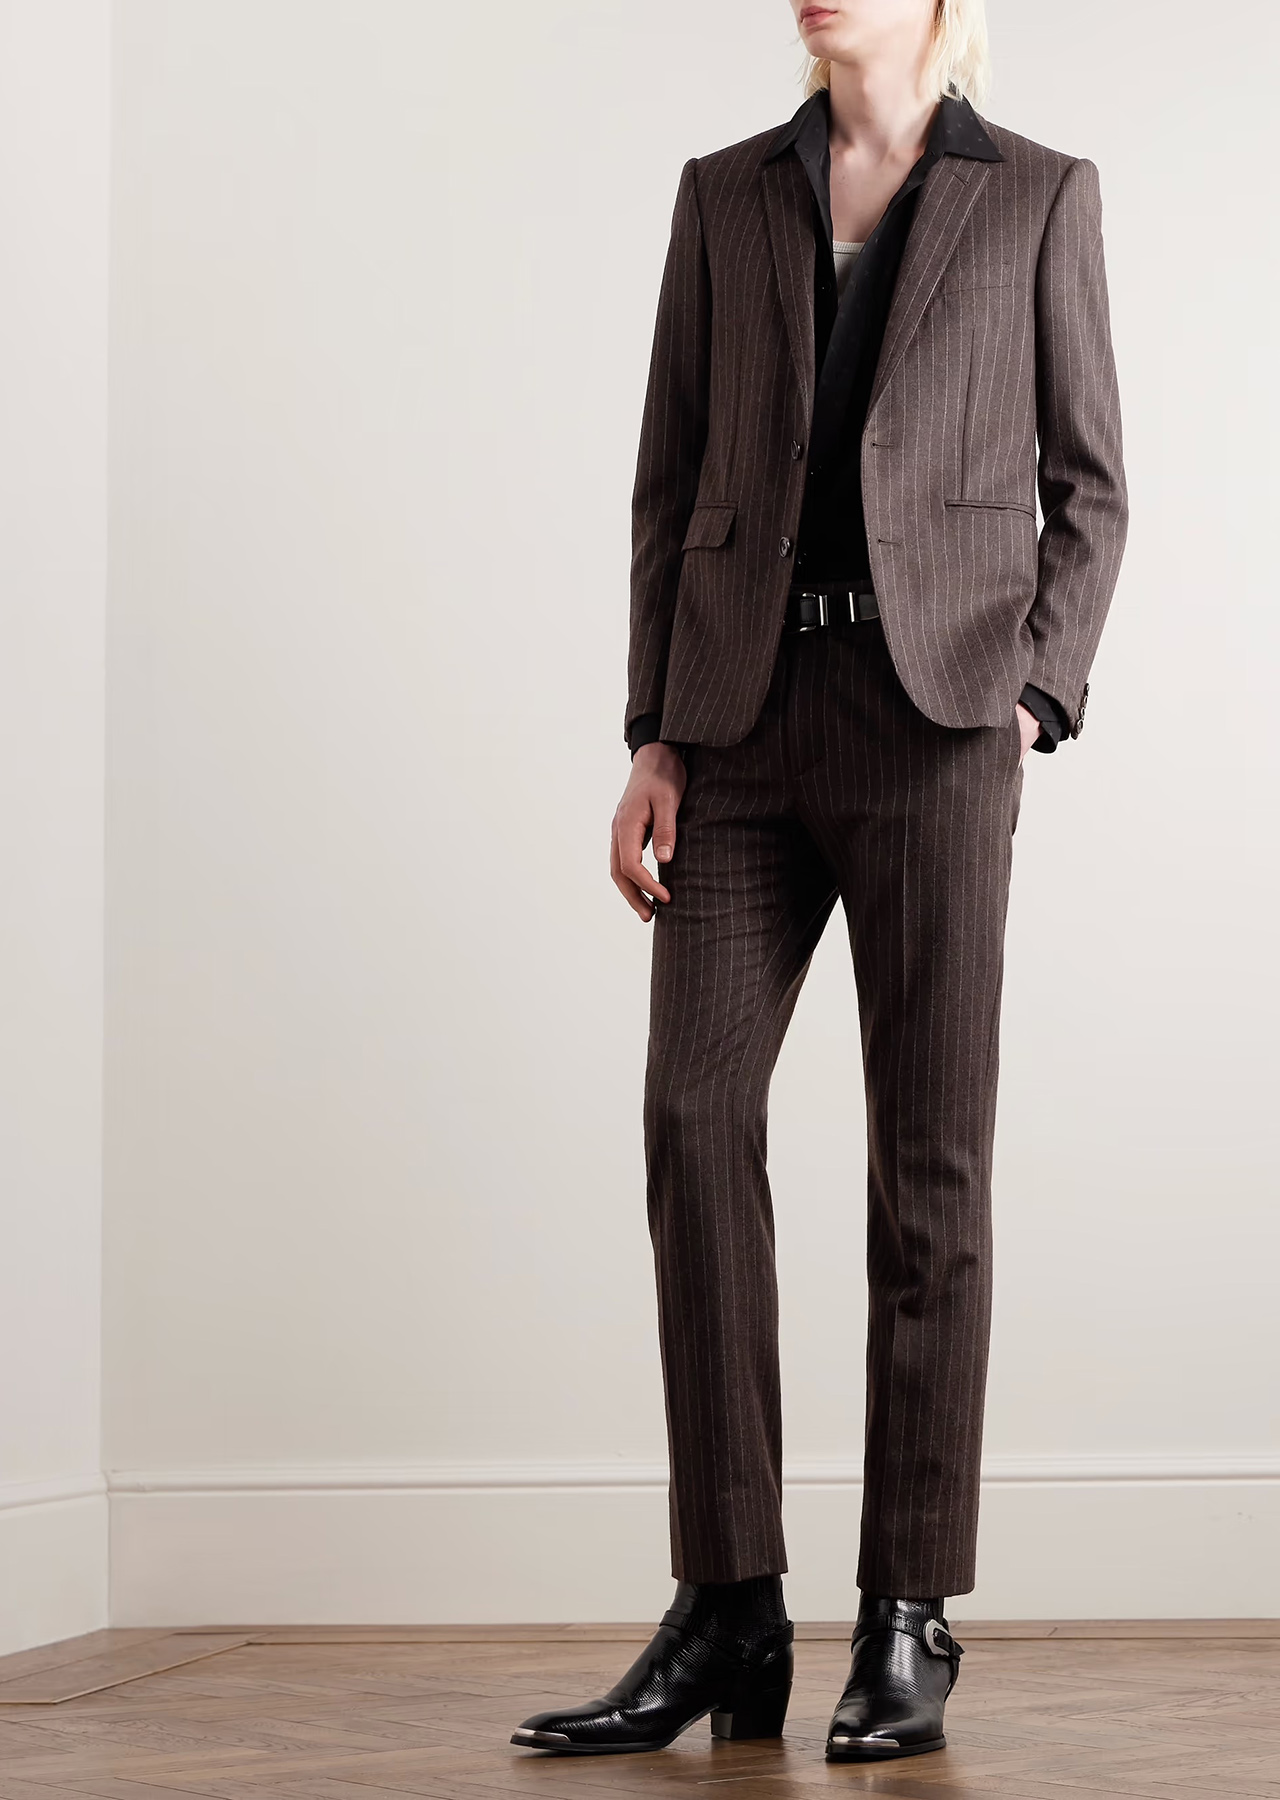 Celine, pinstripe suit